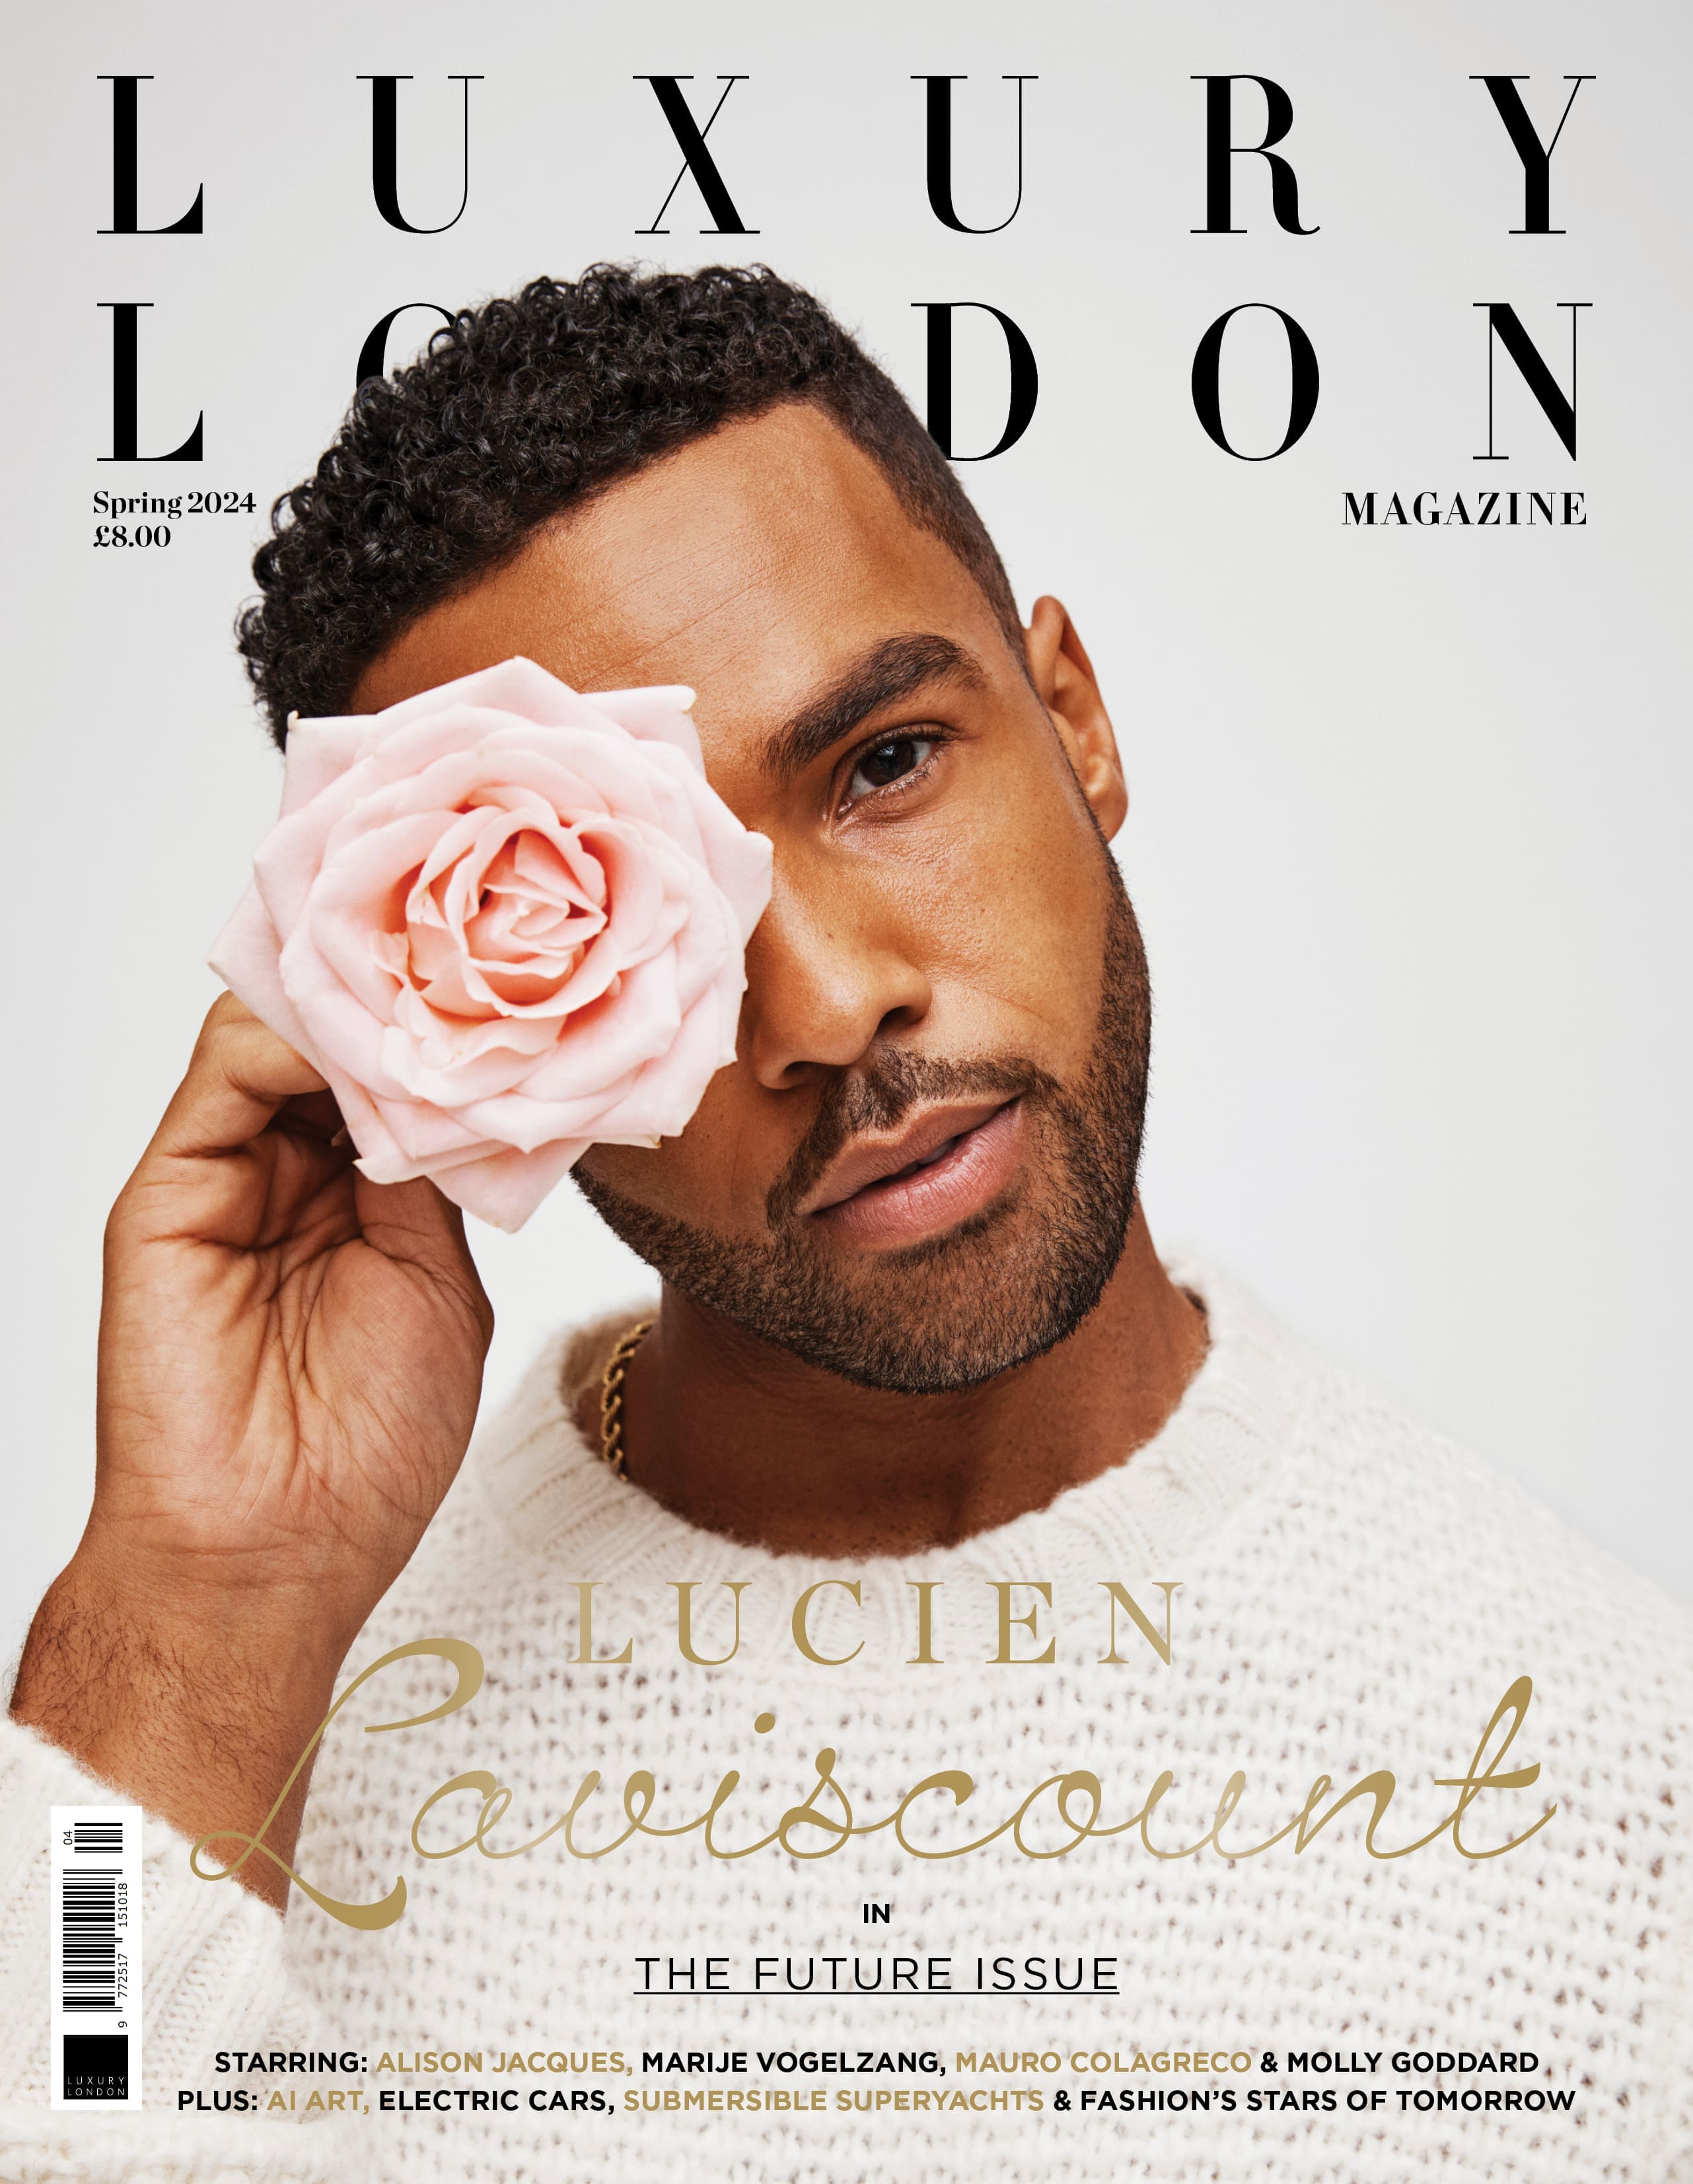 Luxury London Magazine Spring 2024 issue